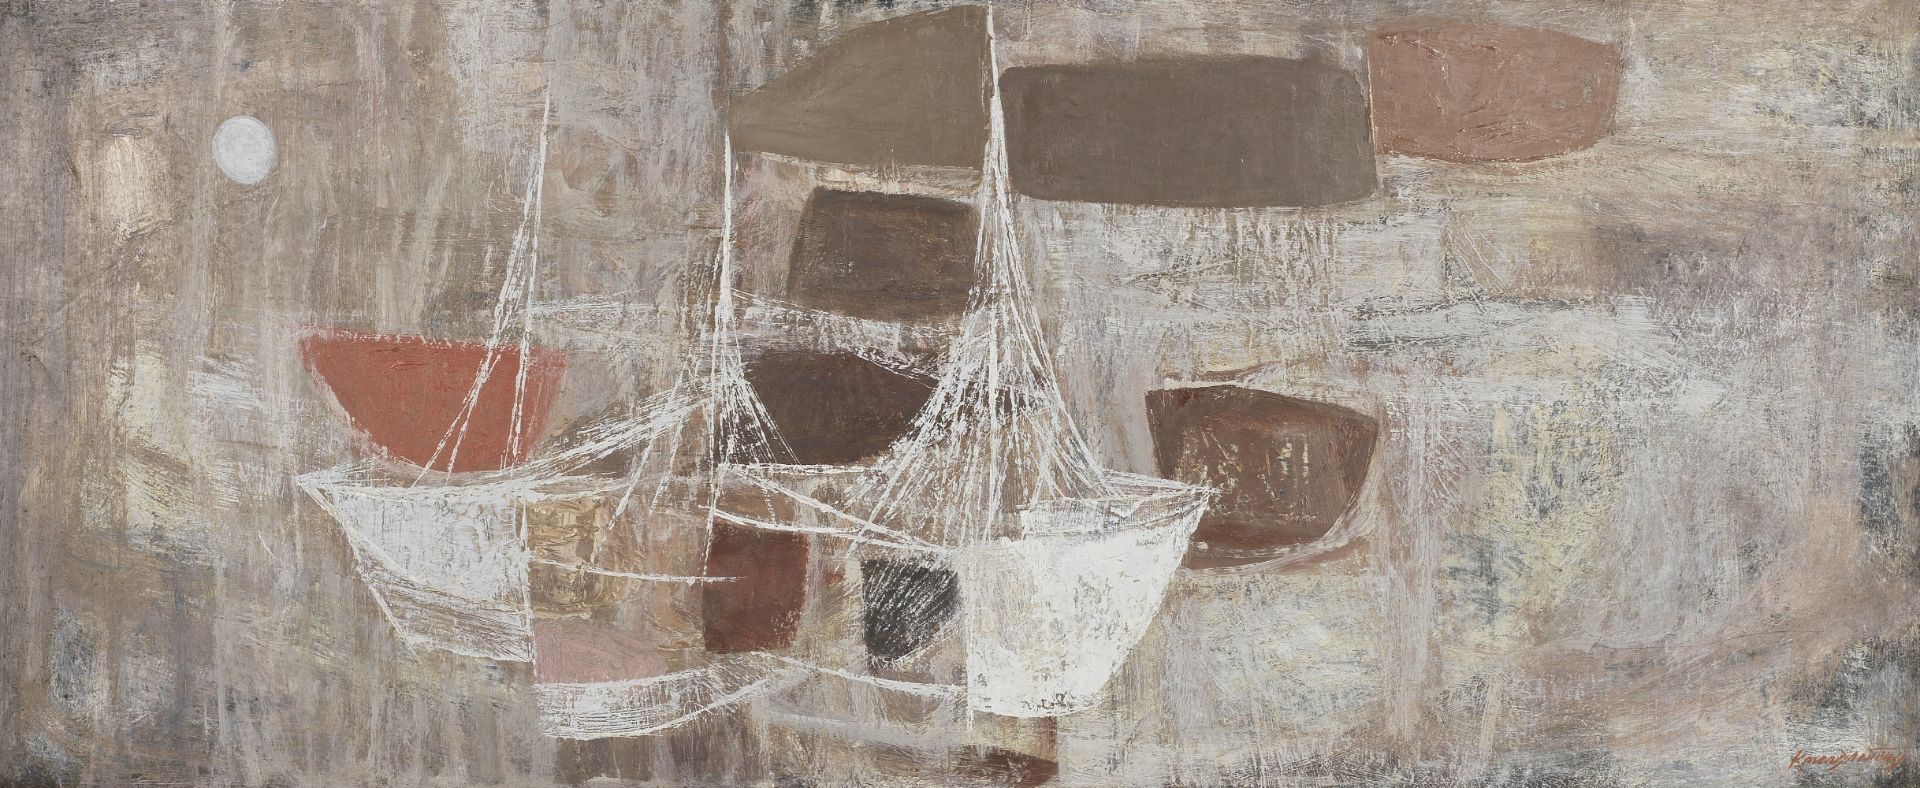 Kwong Yeu Ting (Chinese, 1922-2011) Abstract boats